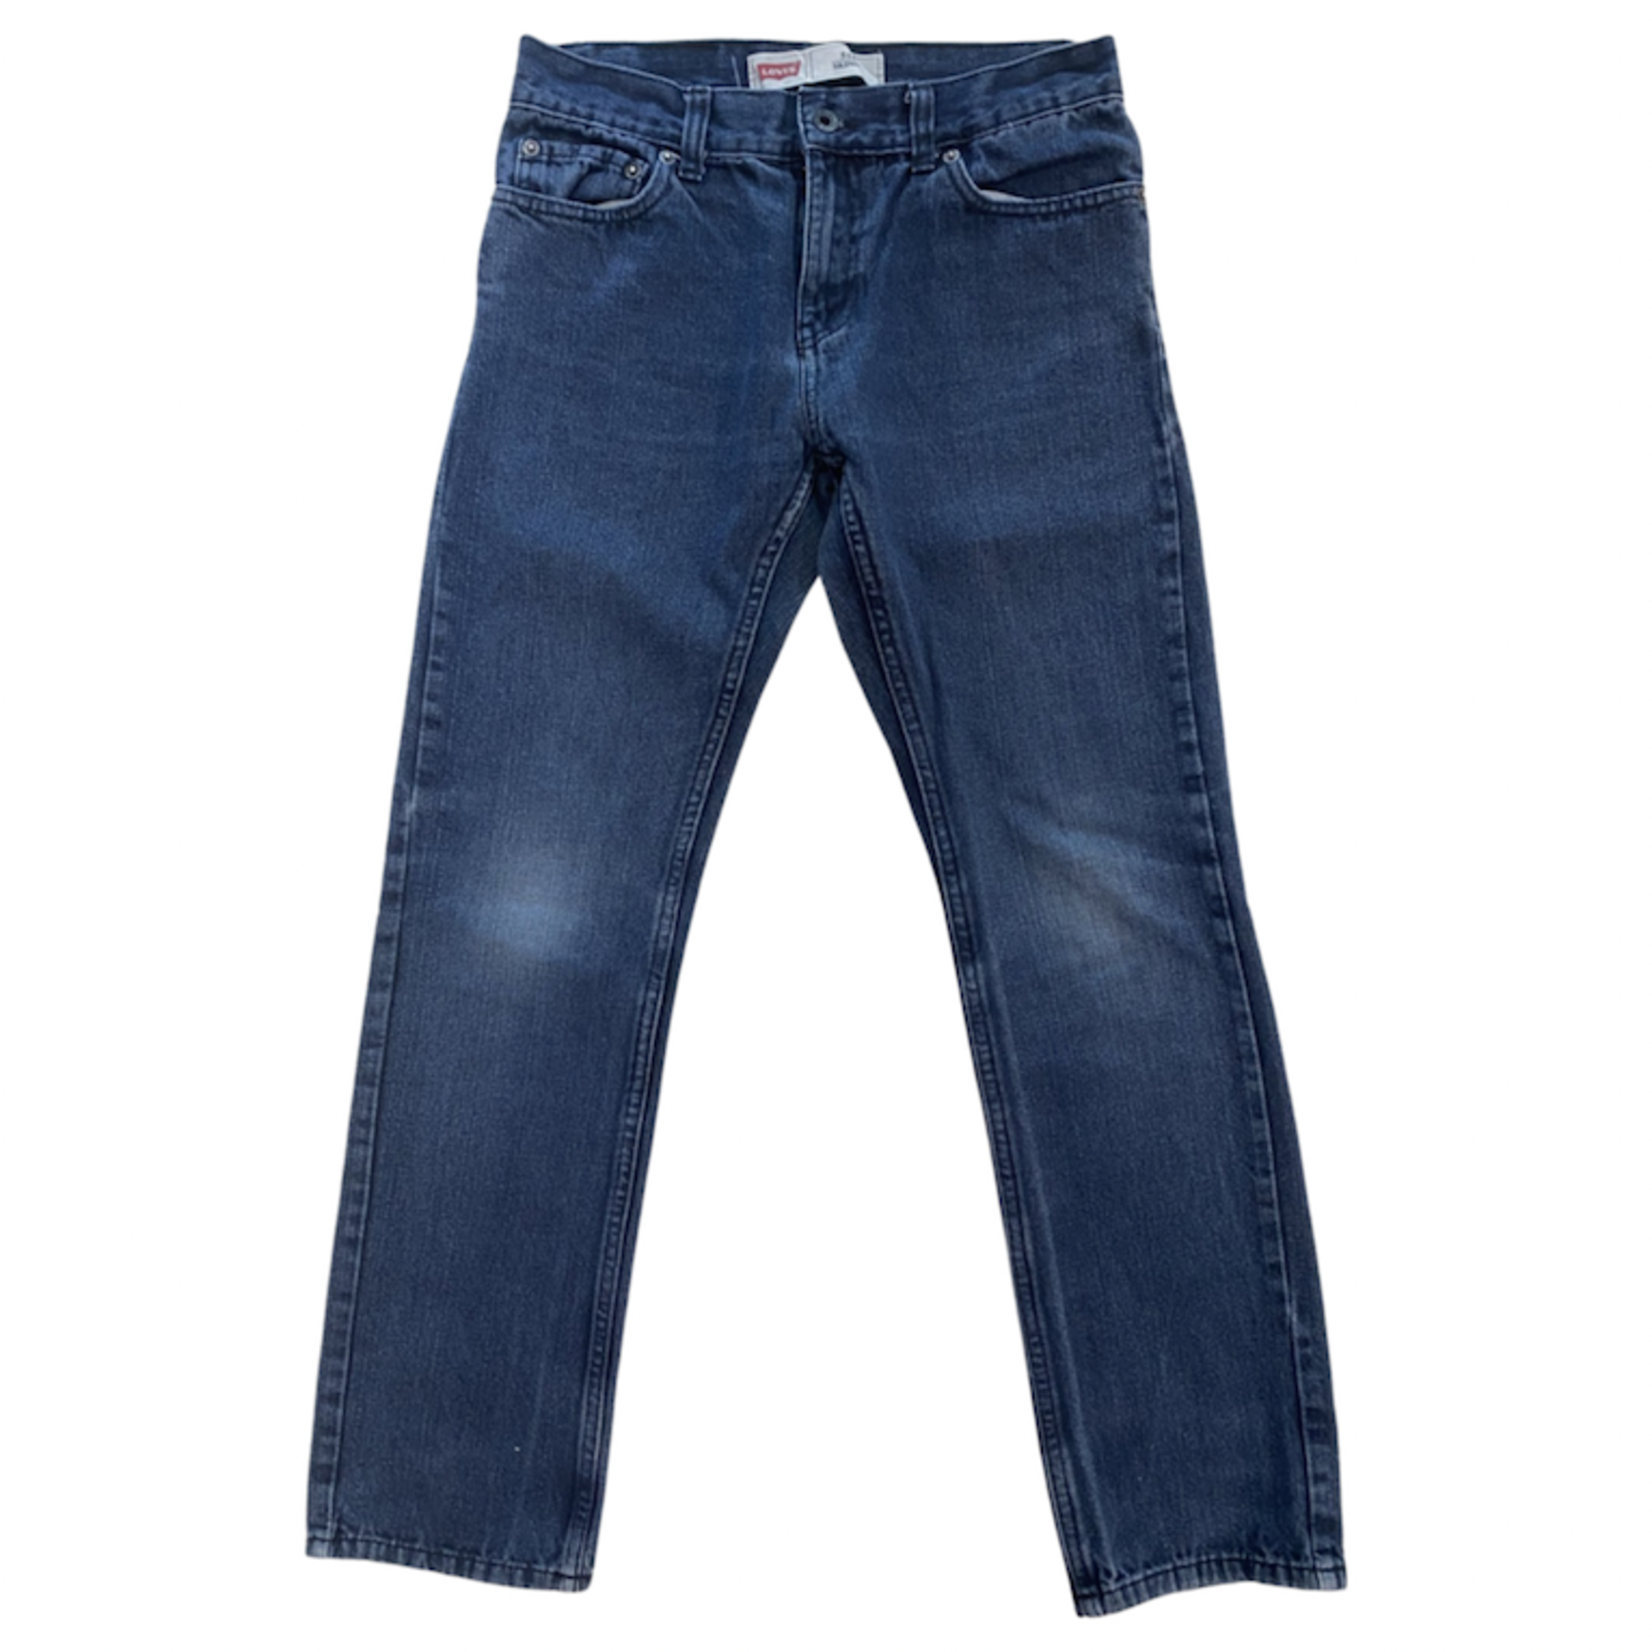 Vintage Levi’s jeans dark blue skinny fit